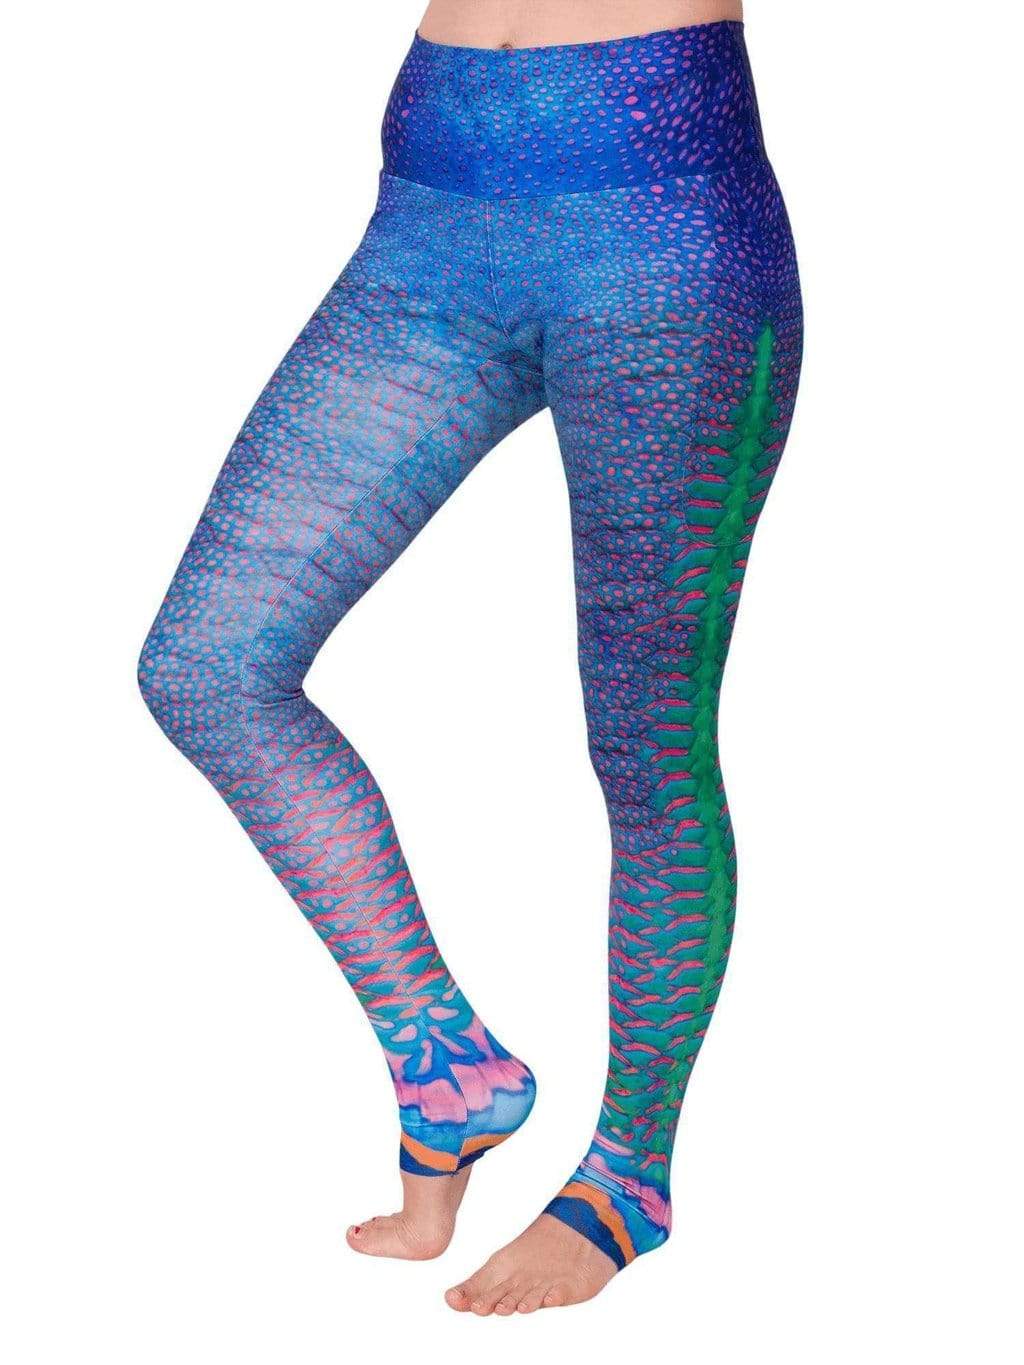 Mermaid Plus Size Yoga Leggings, Scale Print, Ombre, Blue, Purple